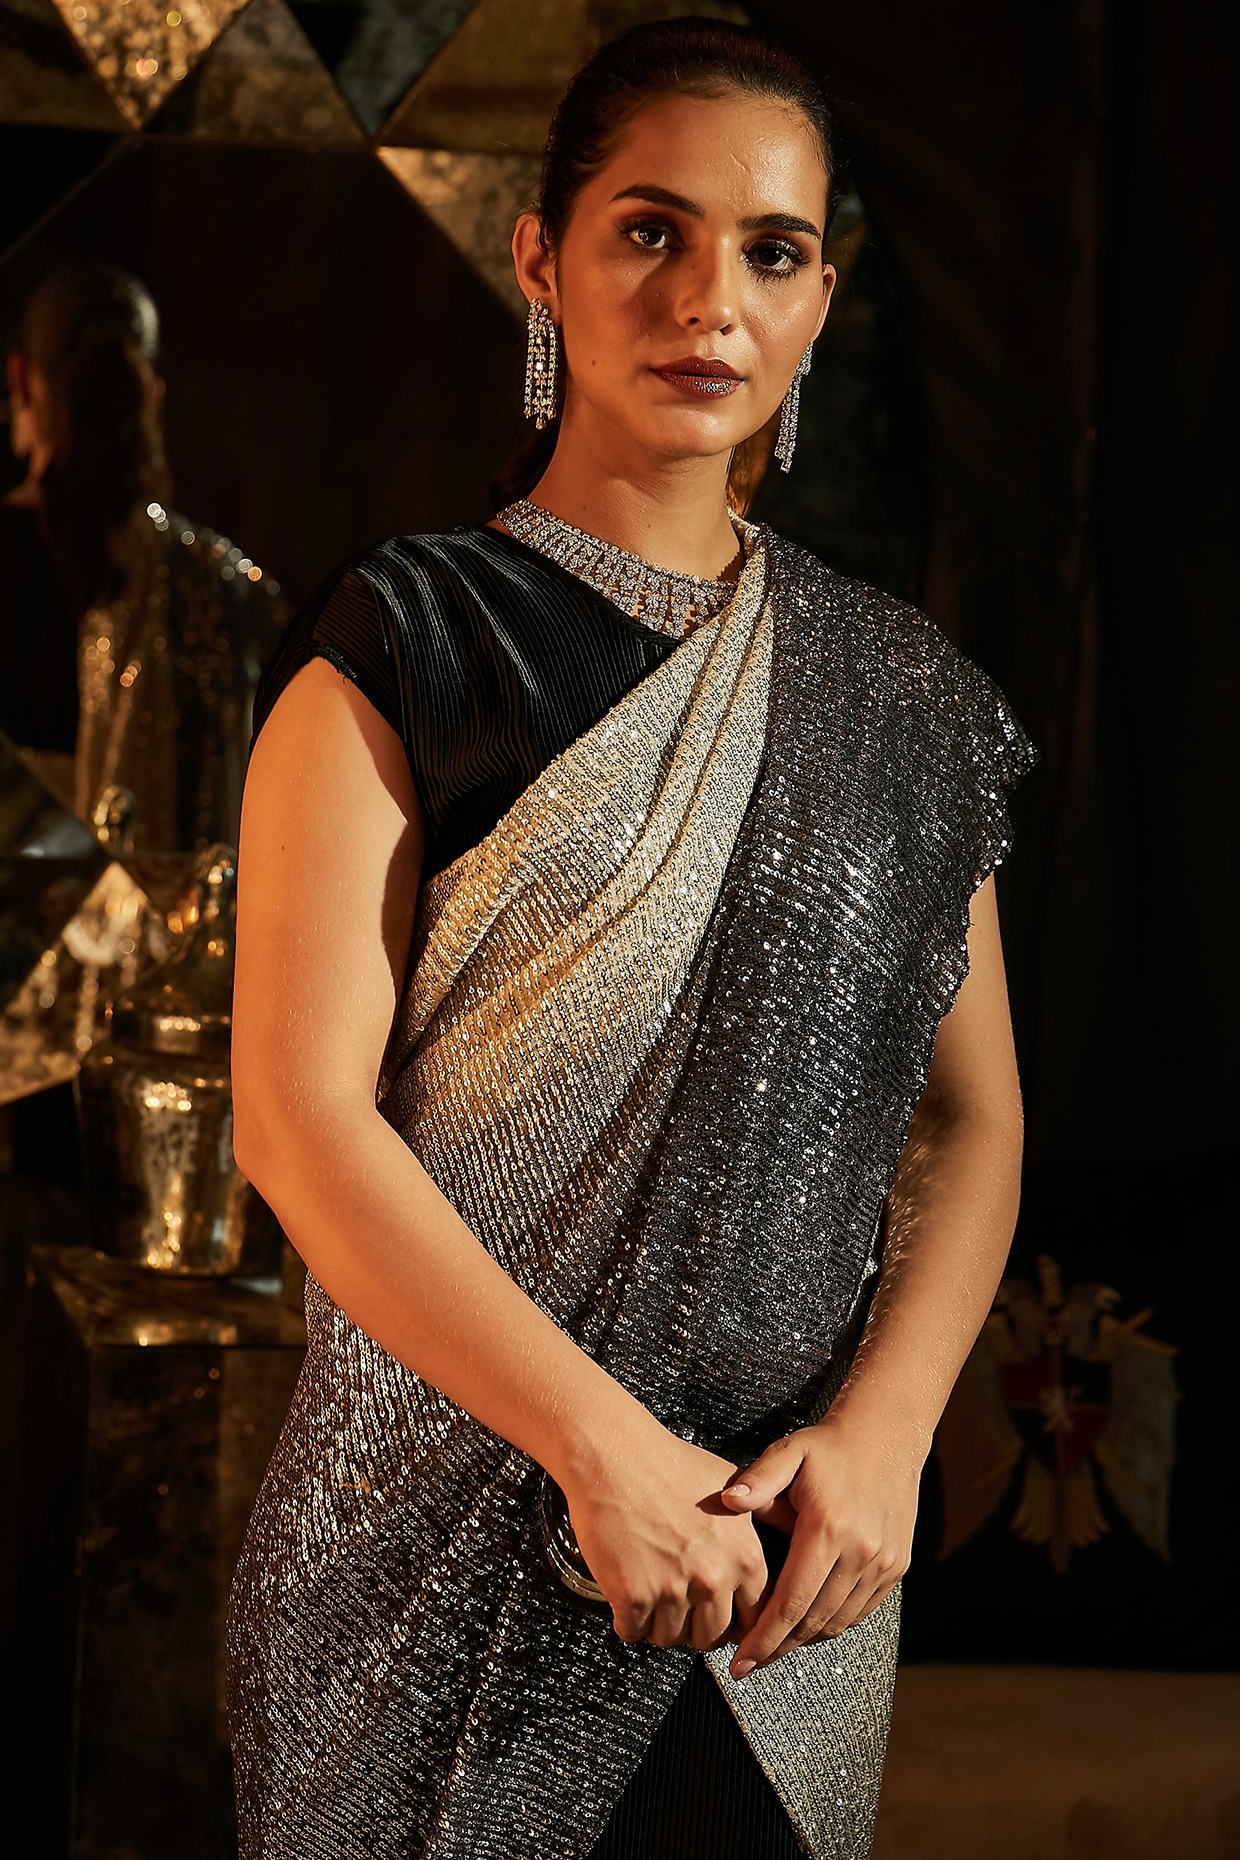 Harnaaz Sandhu NAILS Deepika Padukone-inspired black gown look with  thigh-high slit​ | Zoom TV